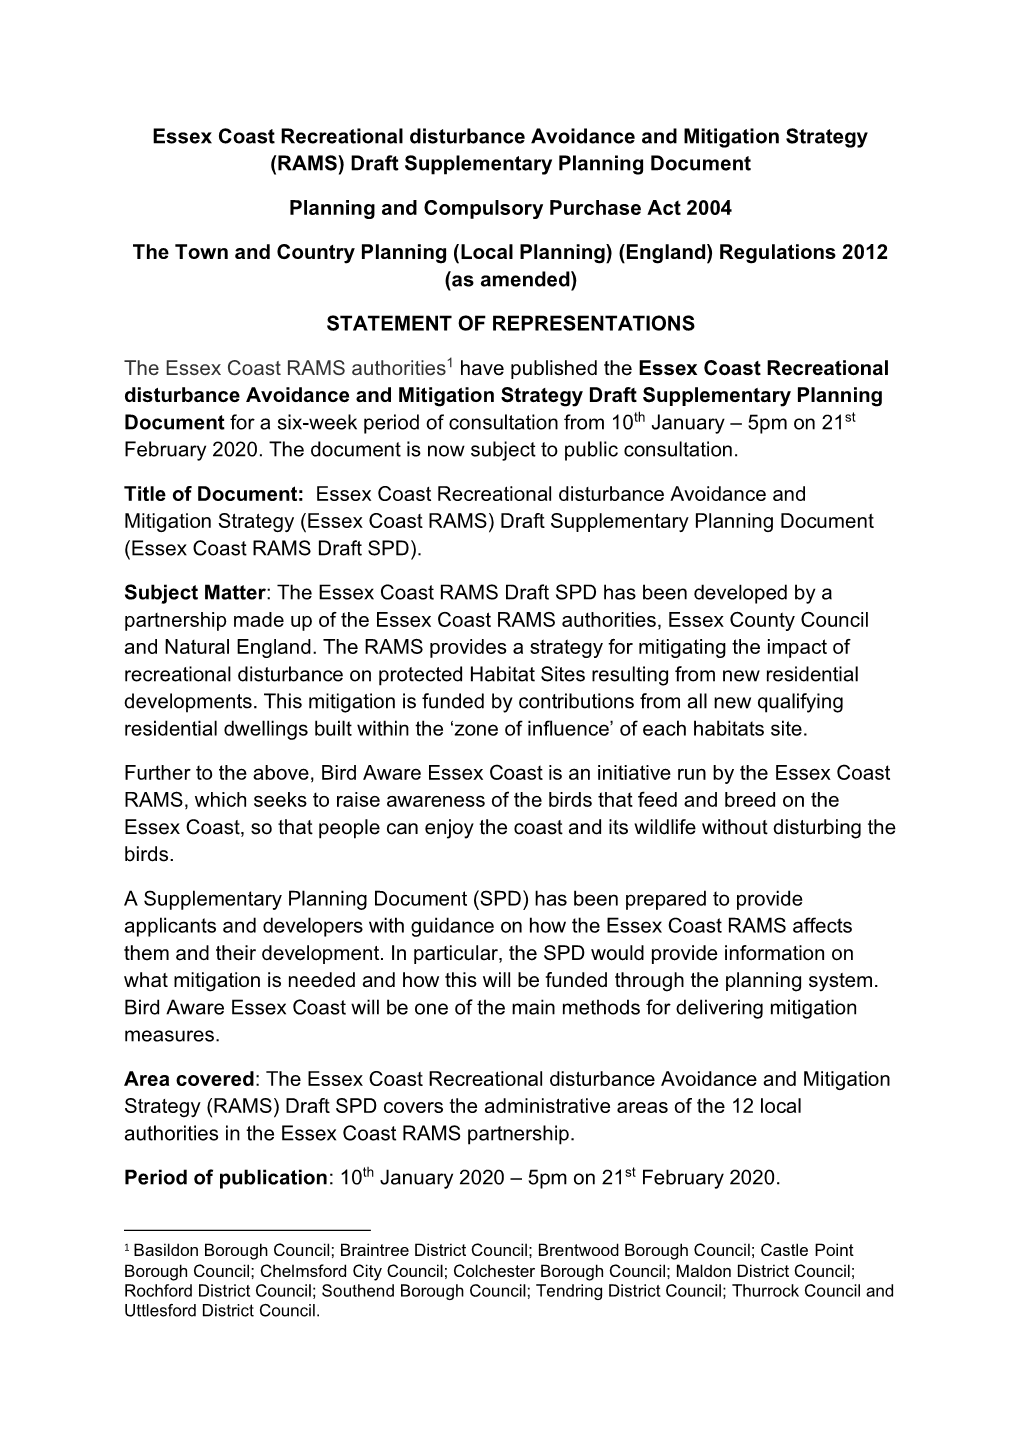 Essex Coast Recreational Disturbance Avoidance and Mitigation Strategy (RAMS) Draft Supplementary Planning Document